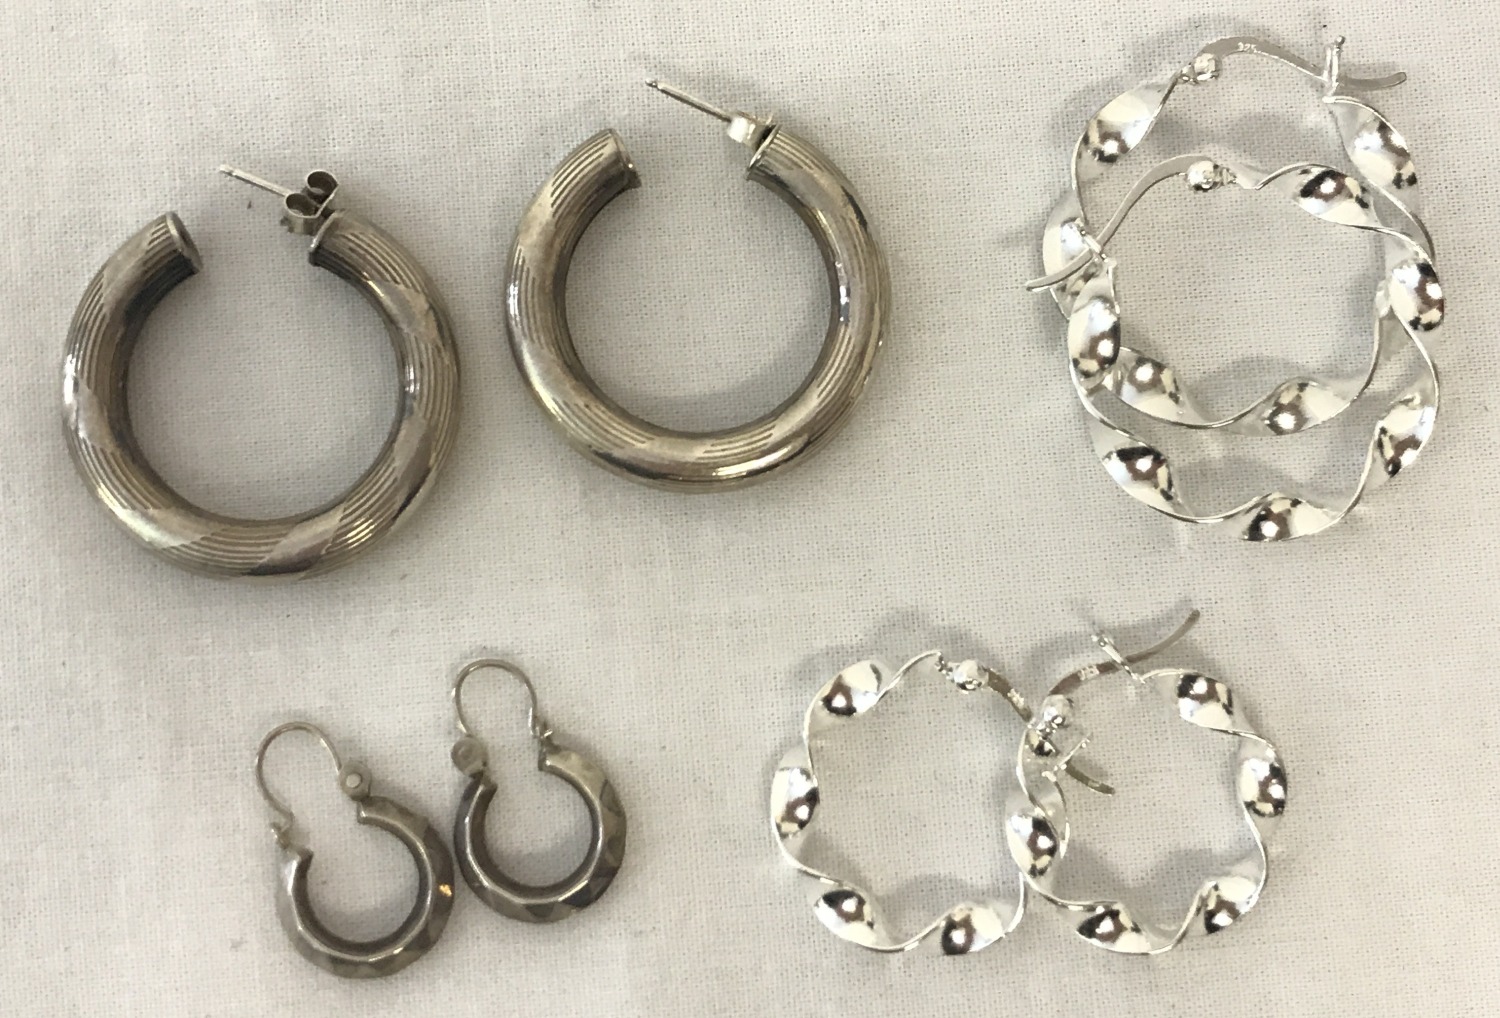 4 pairs of silver and white metal hoop style earrings.